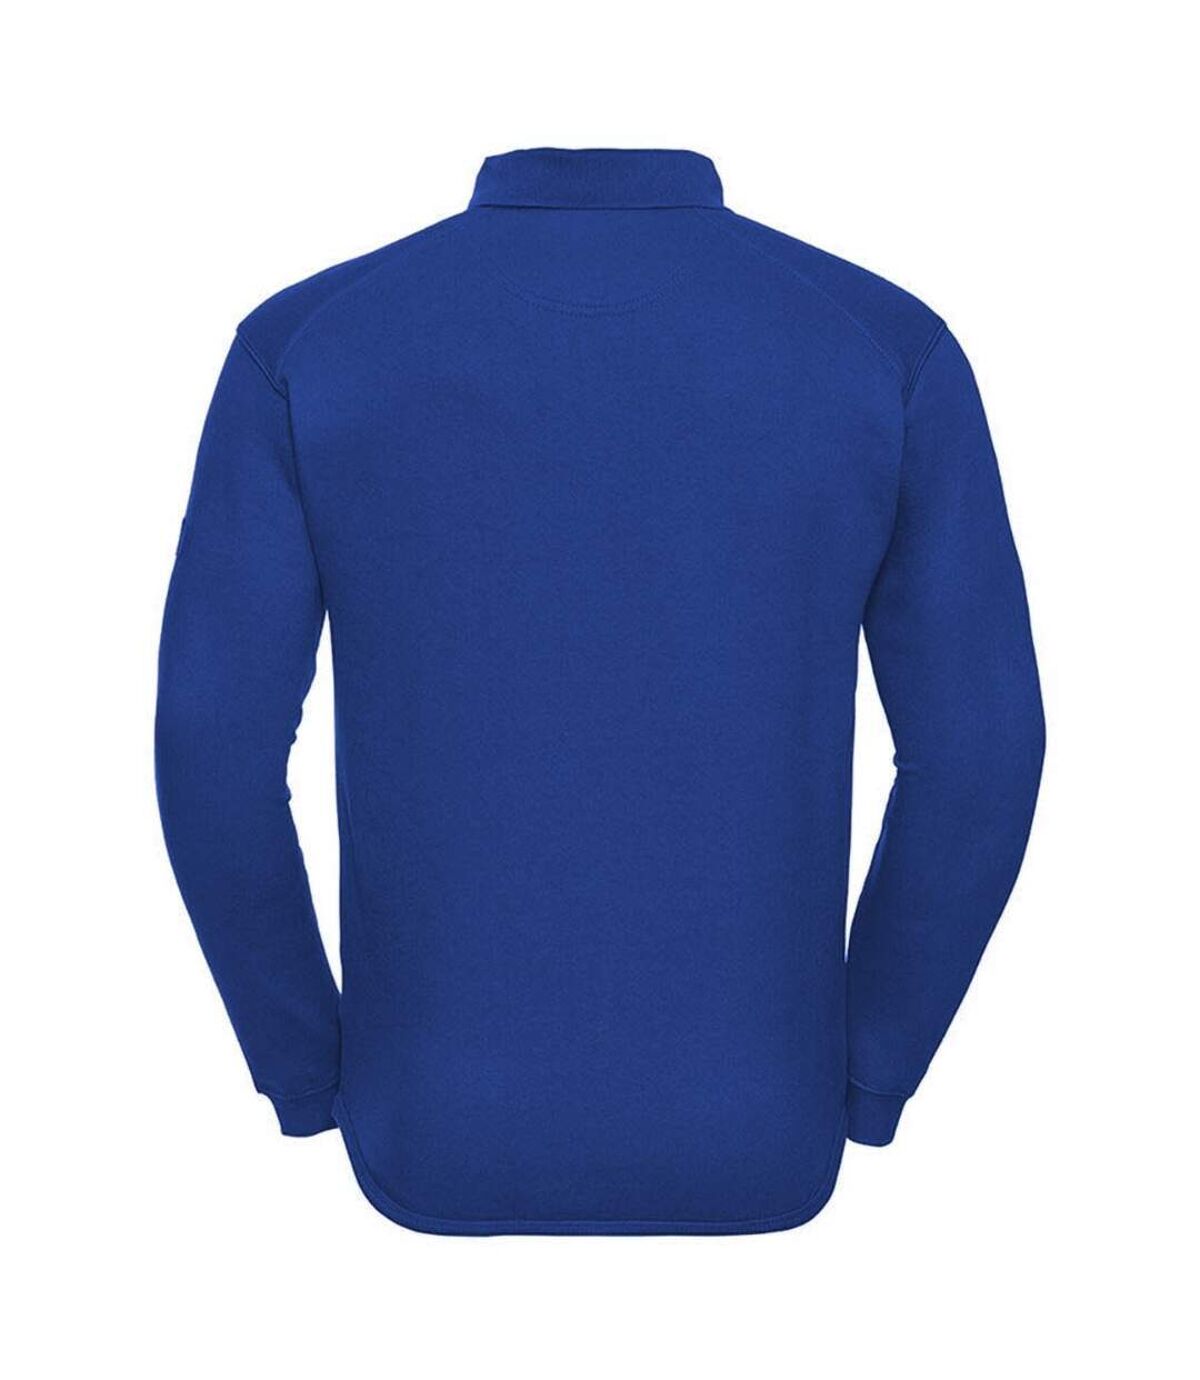 Russell Europe Mens Heavy Duty Collar Sweatshirt (Bright Royal)